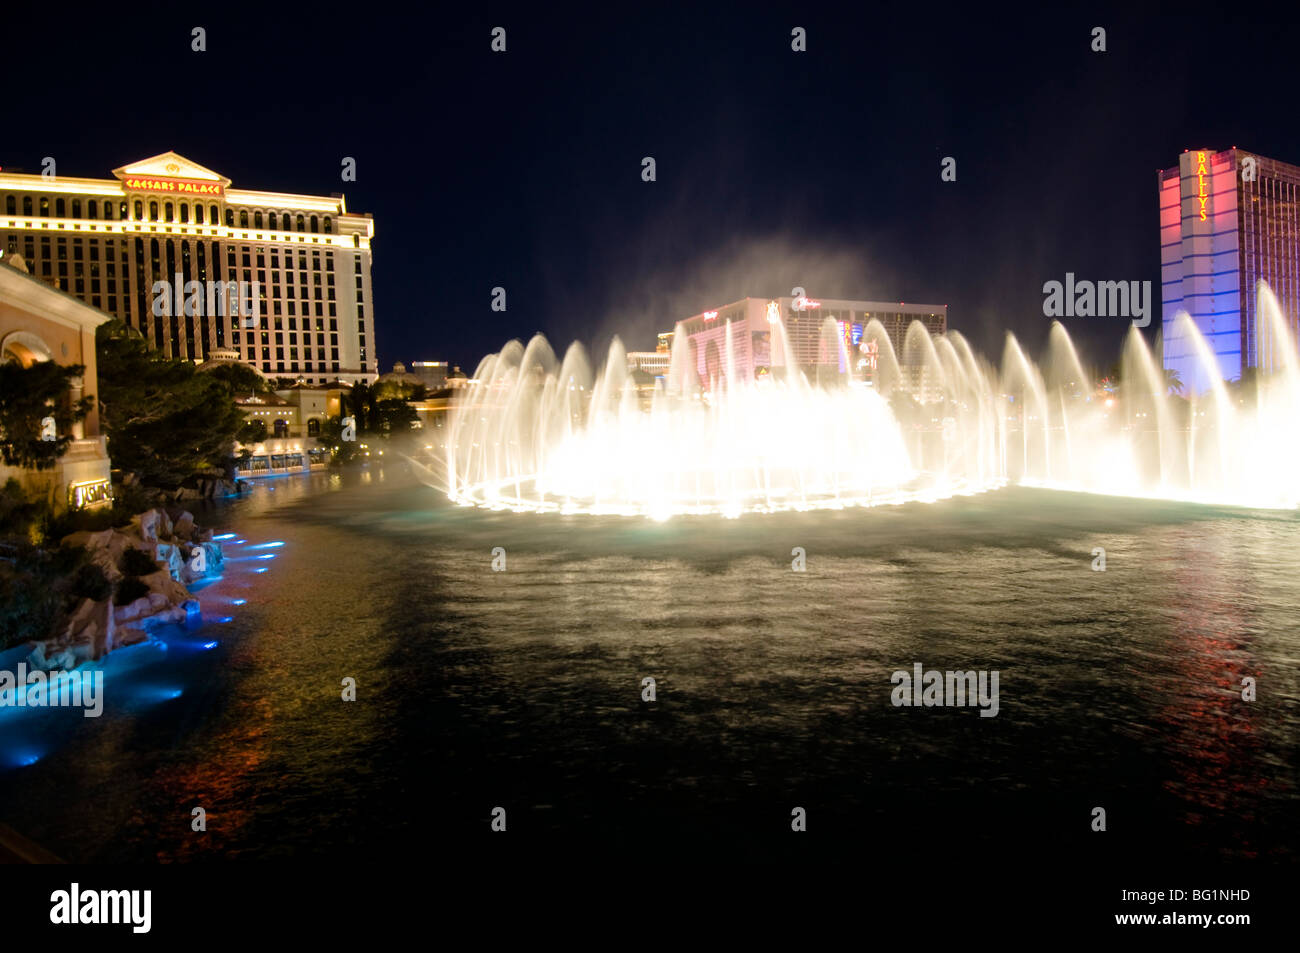 Fountains of Bellagio, Bellagio Hotel, The Strip, Las Vegas, Nevada, USA Stock Photo